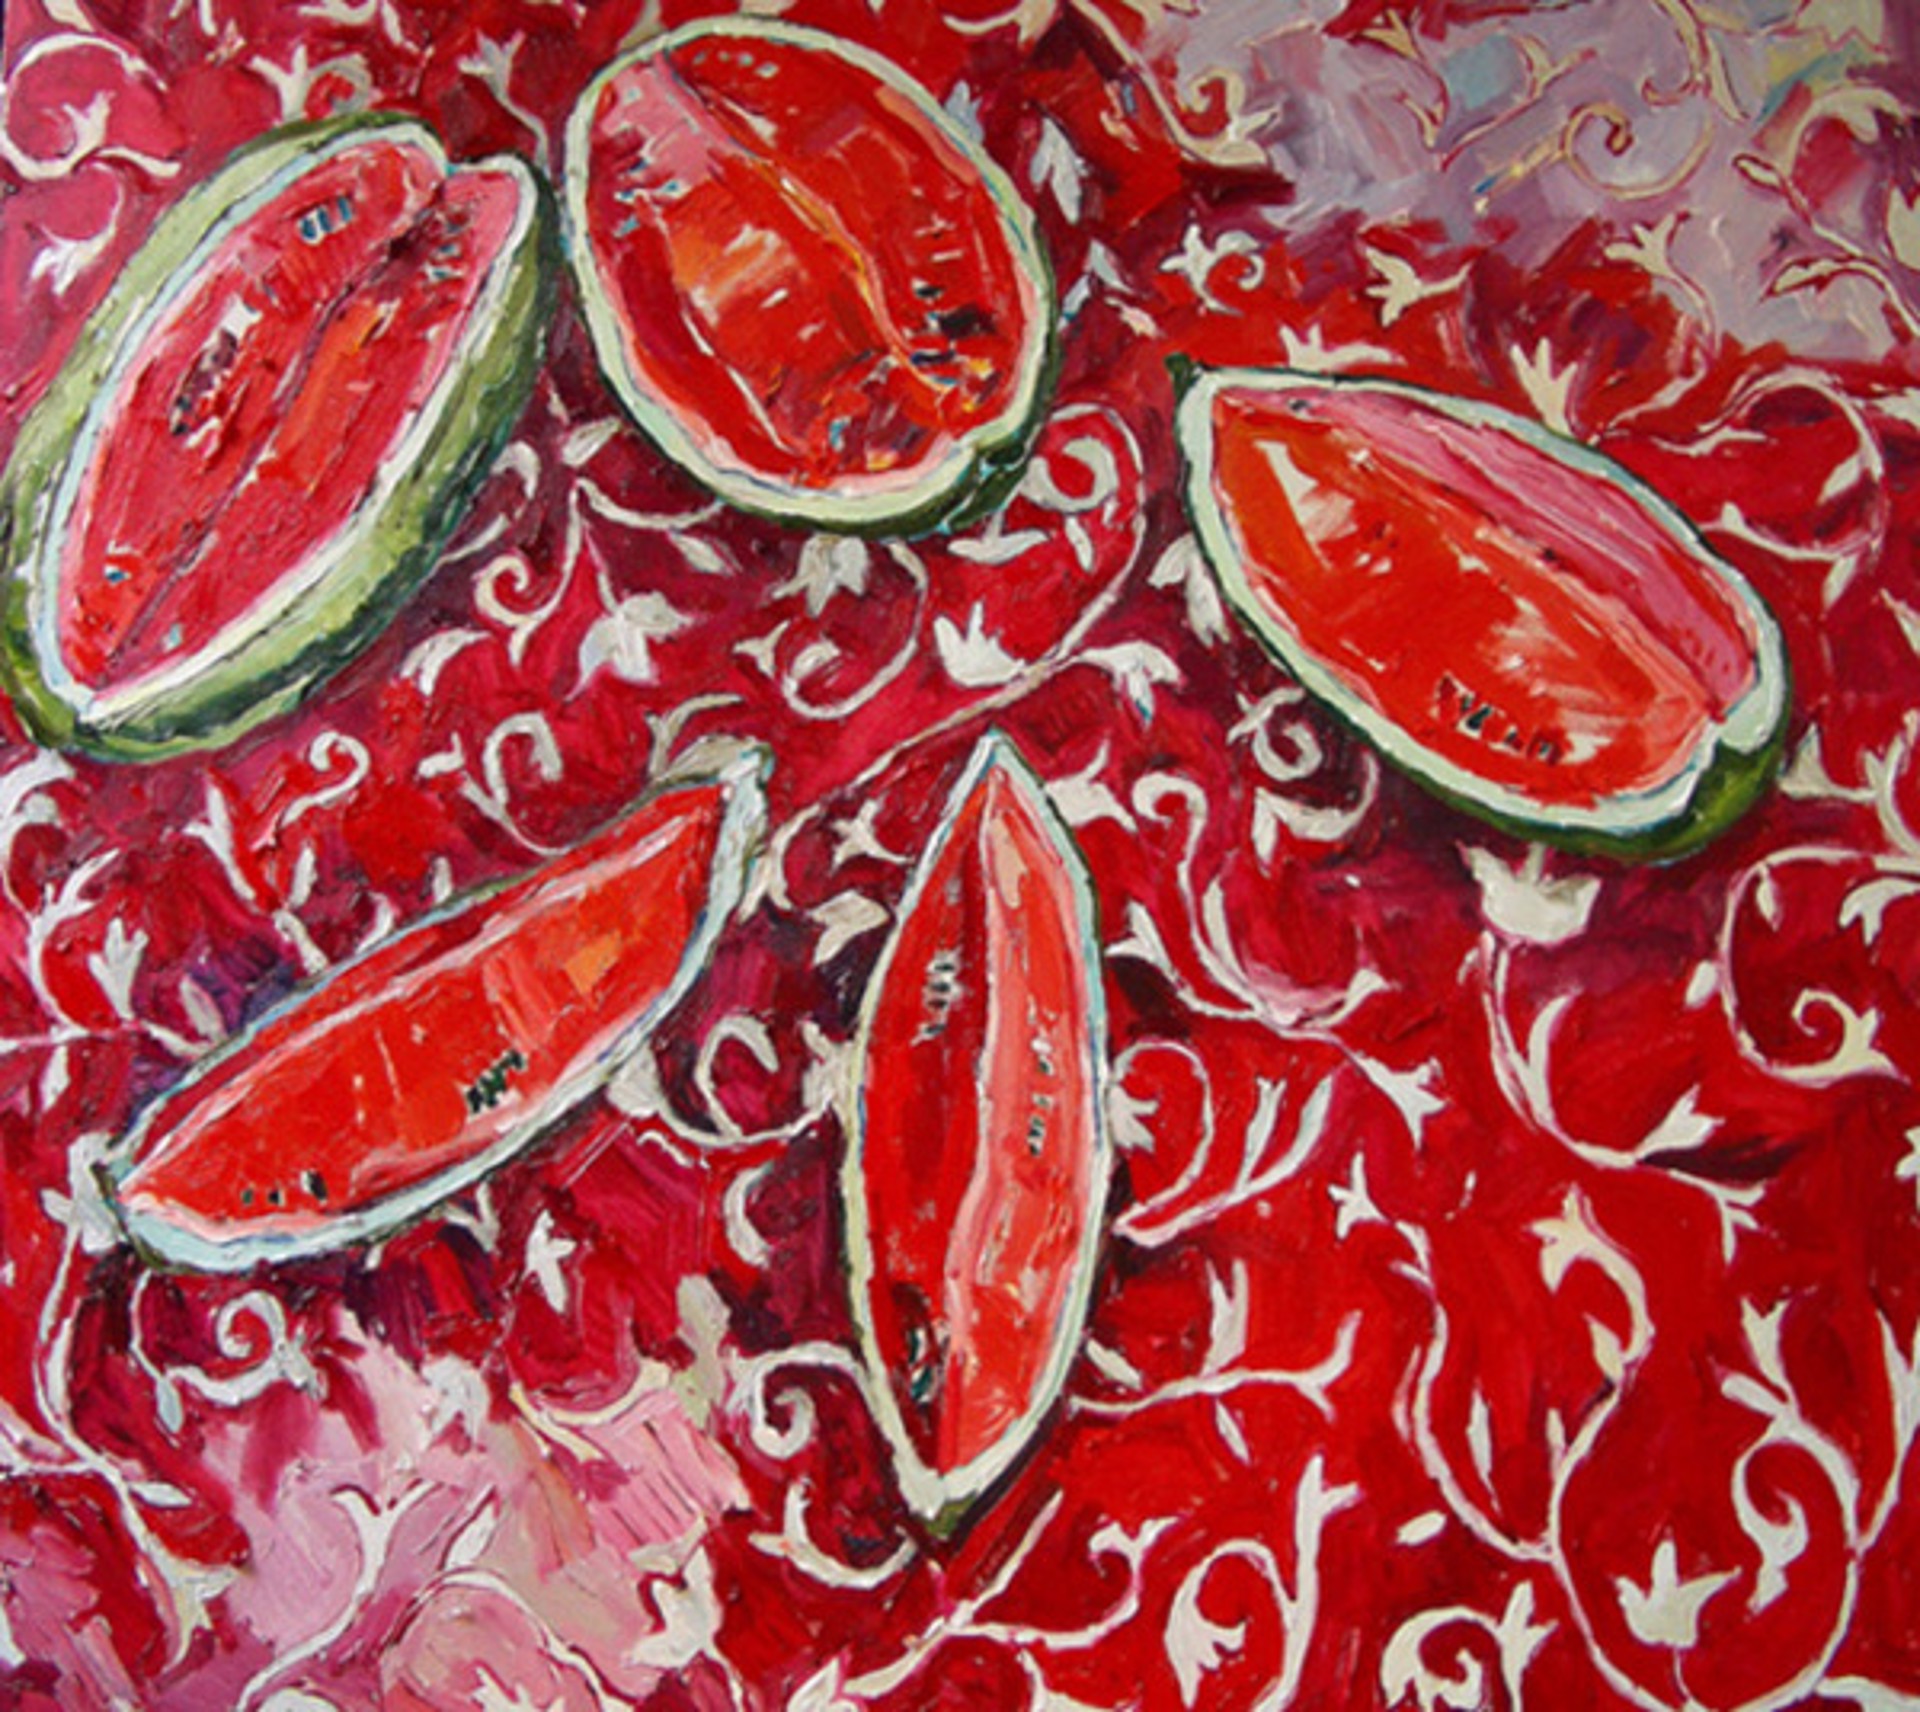 Watermelon by Alexandra Syrbu